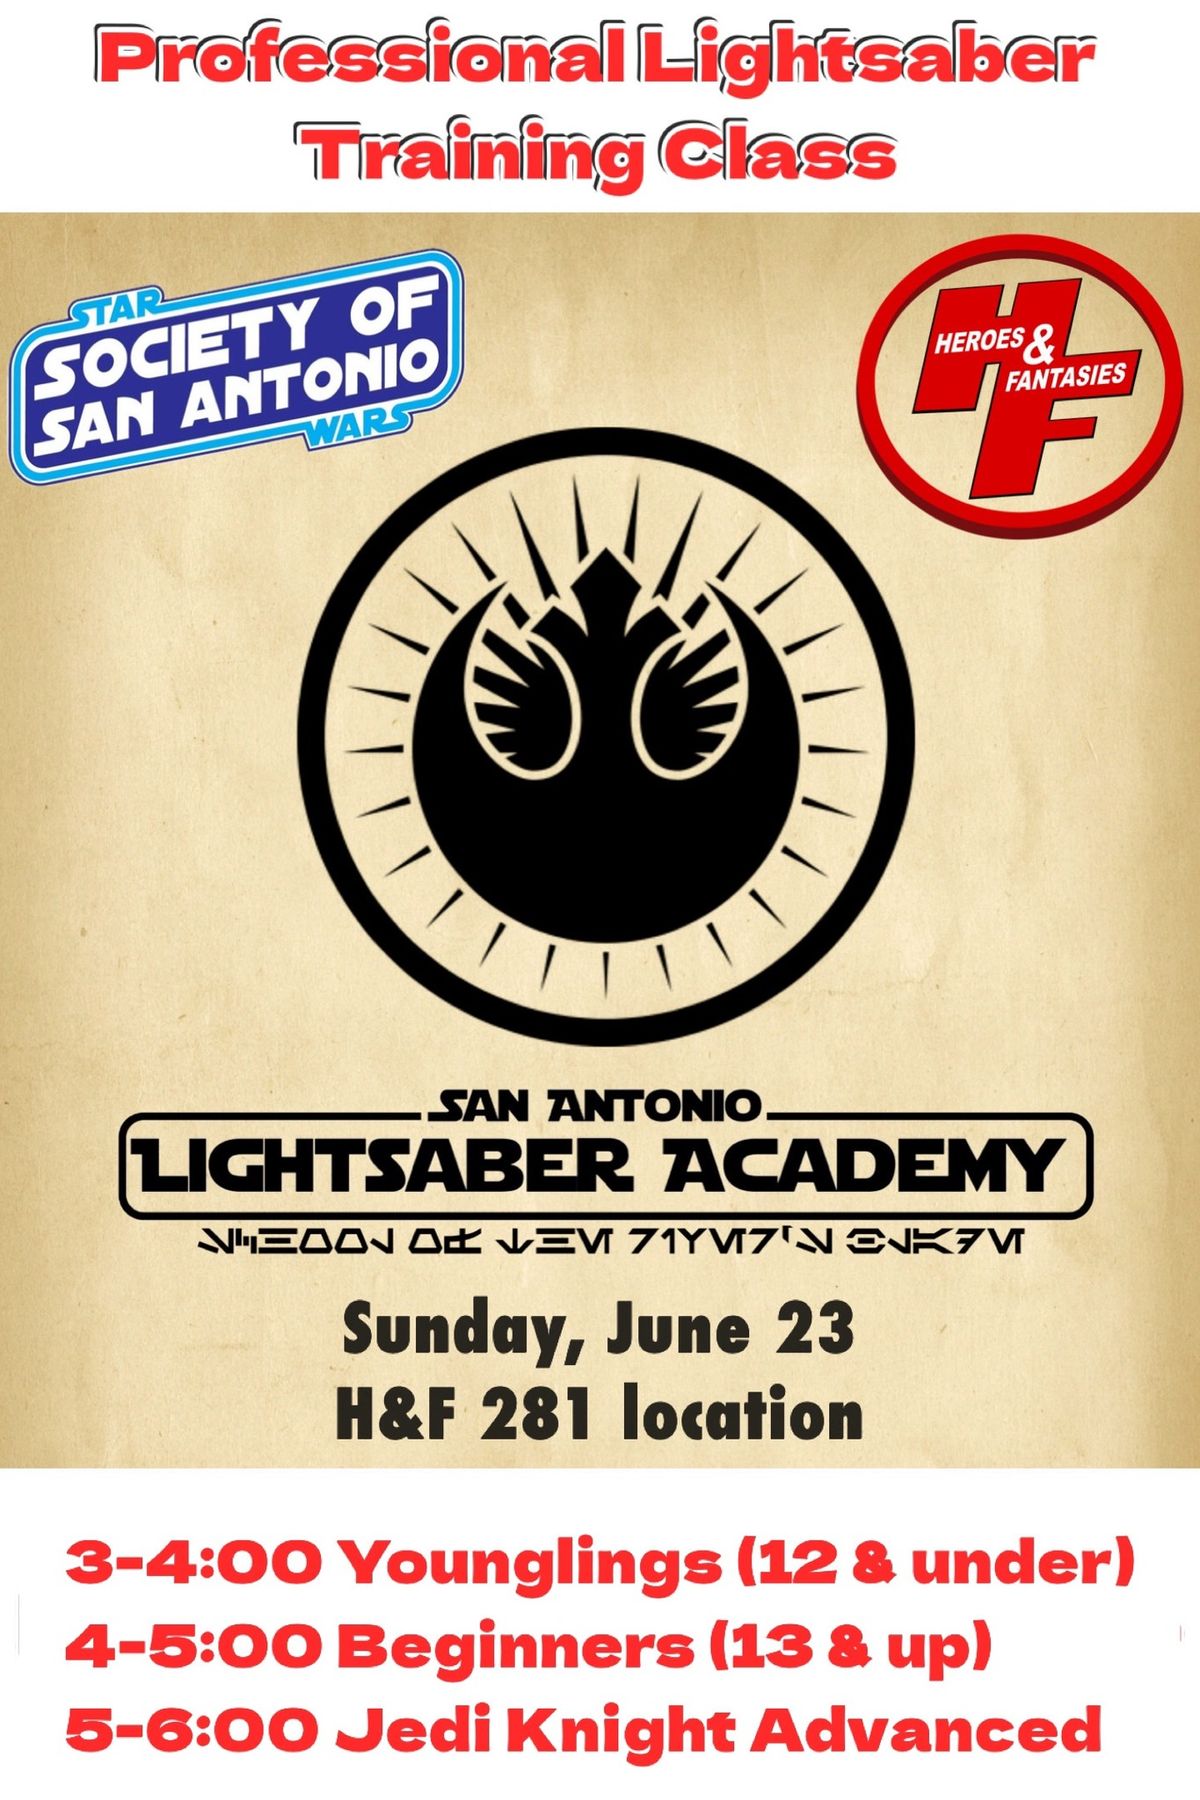 Lightsaber Training Class - Free!